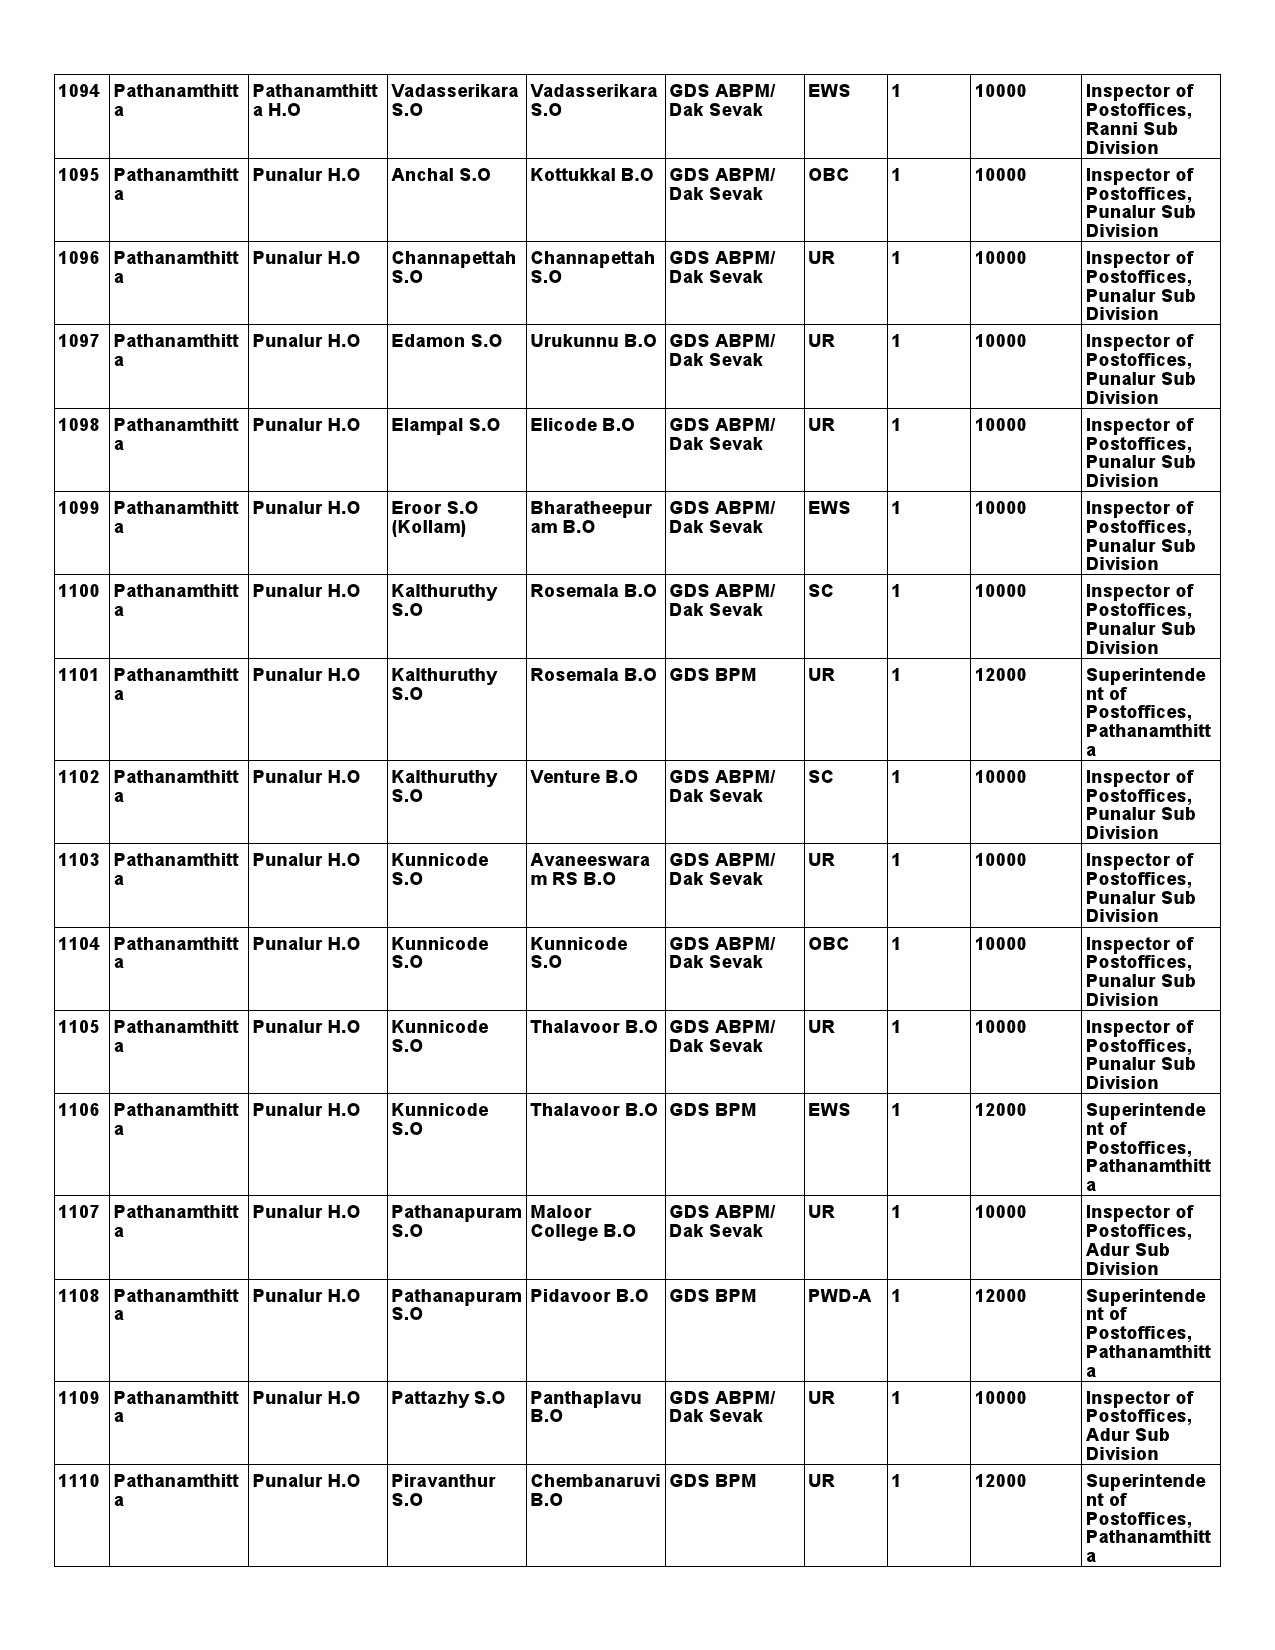 Kerala Postal Circle GDS Recruitment 2021 notification - Notification Image 91